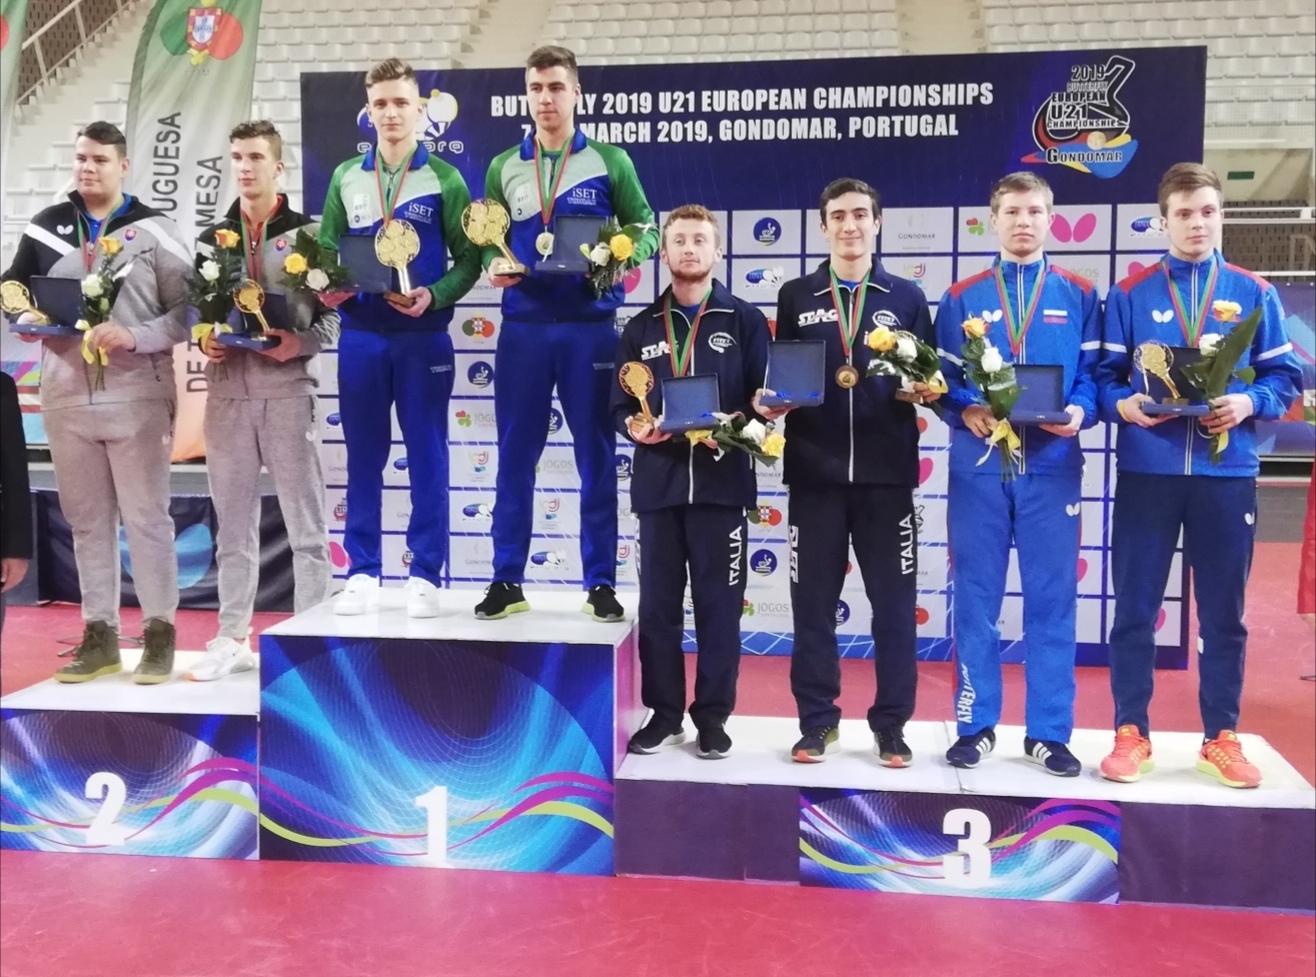 Campionati Europei Under 21 2019 podio doppio maschile